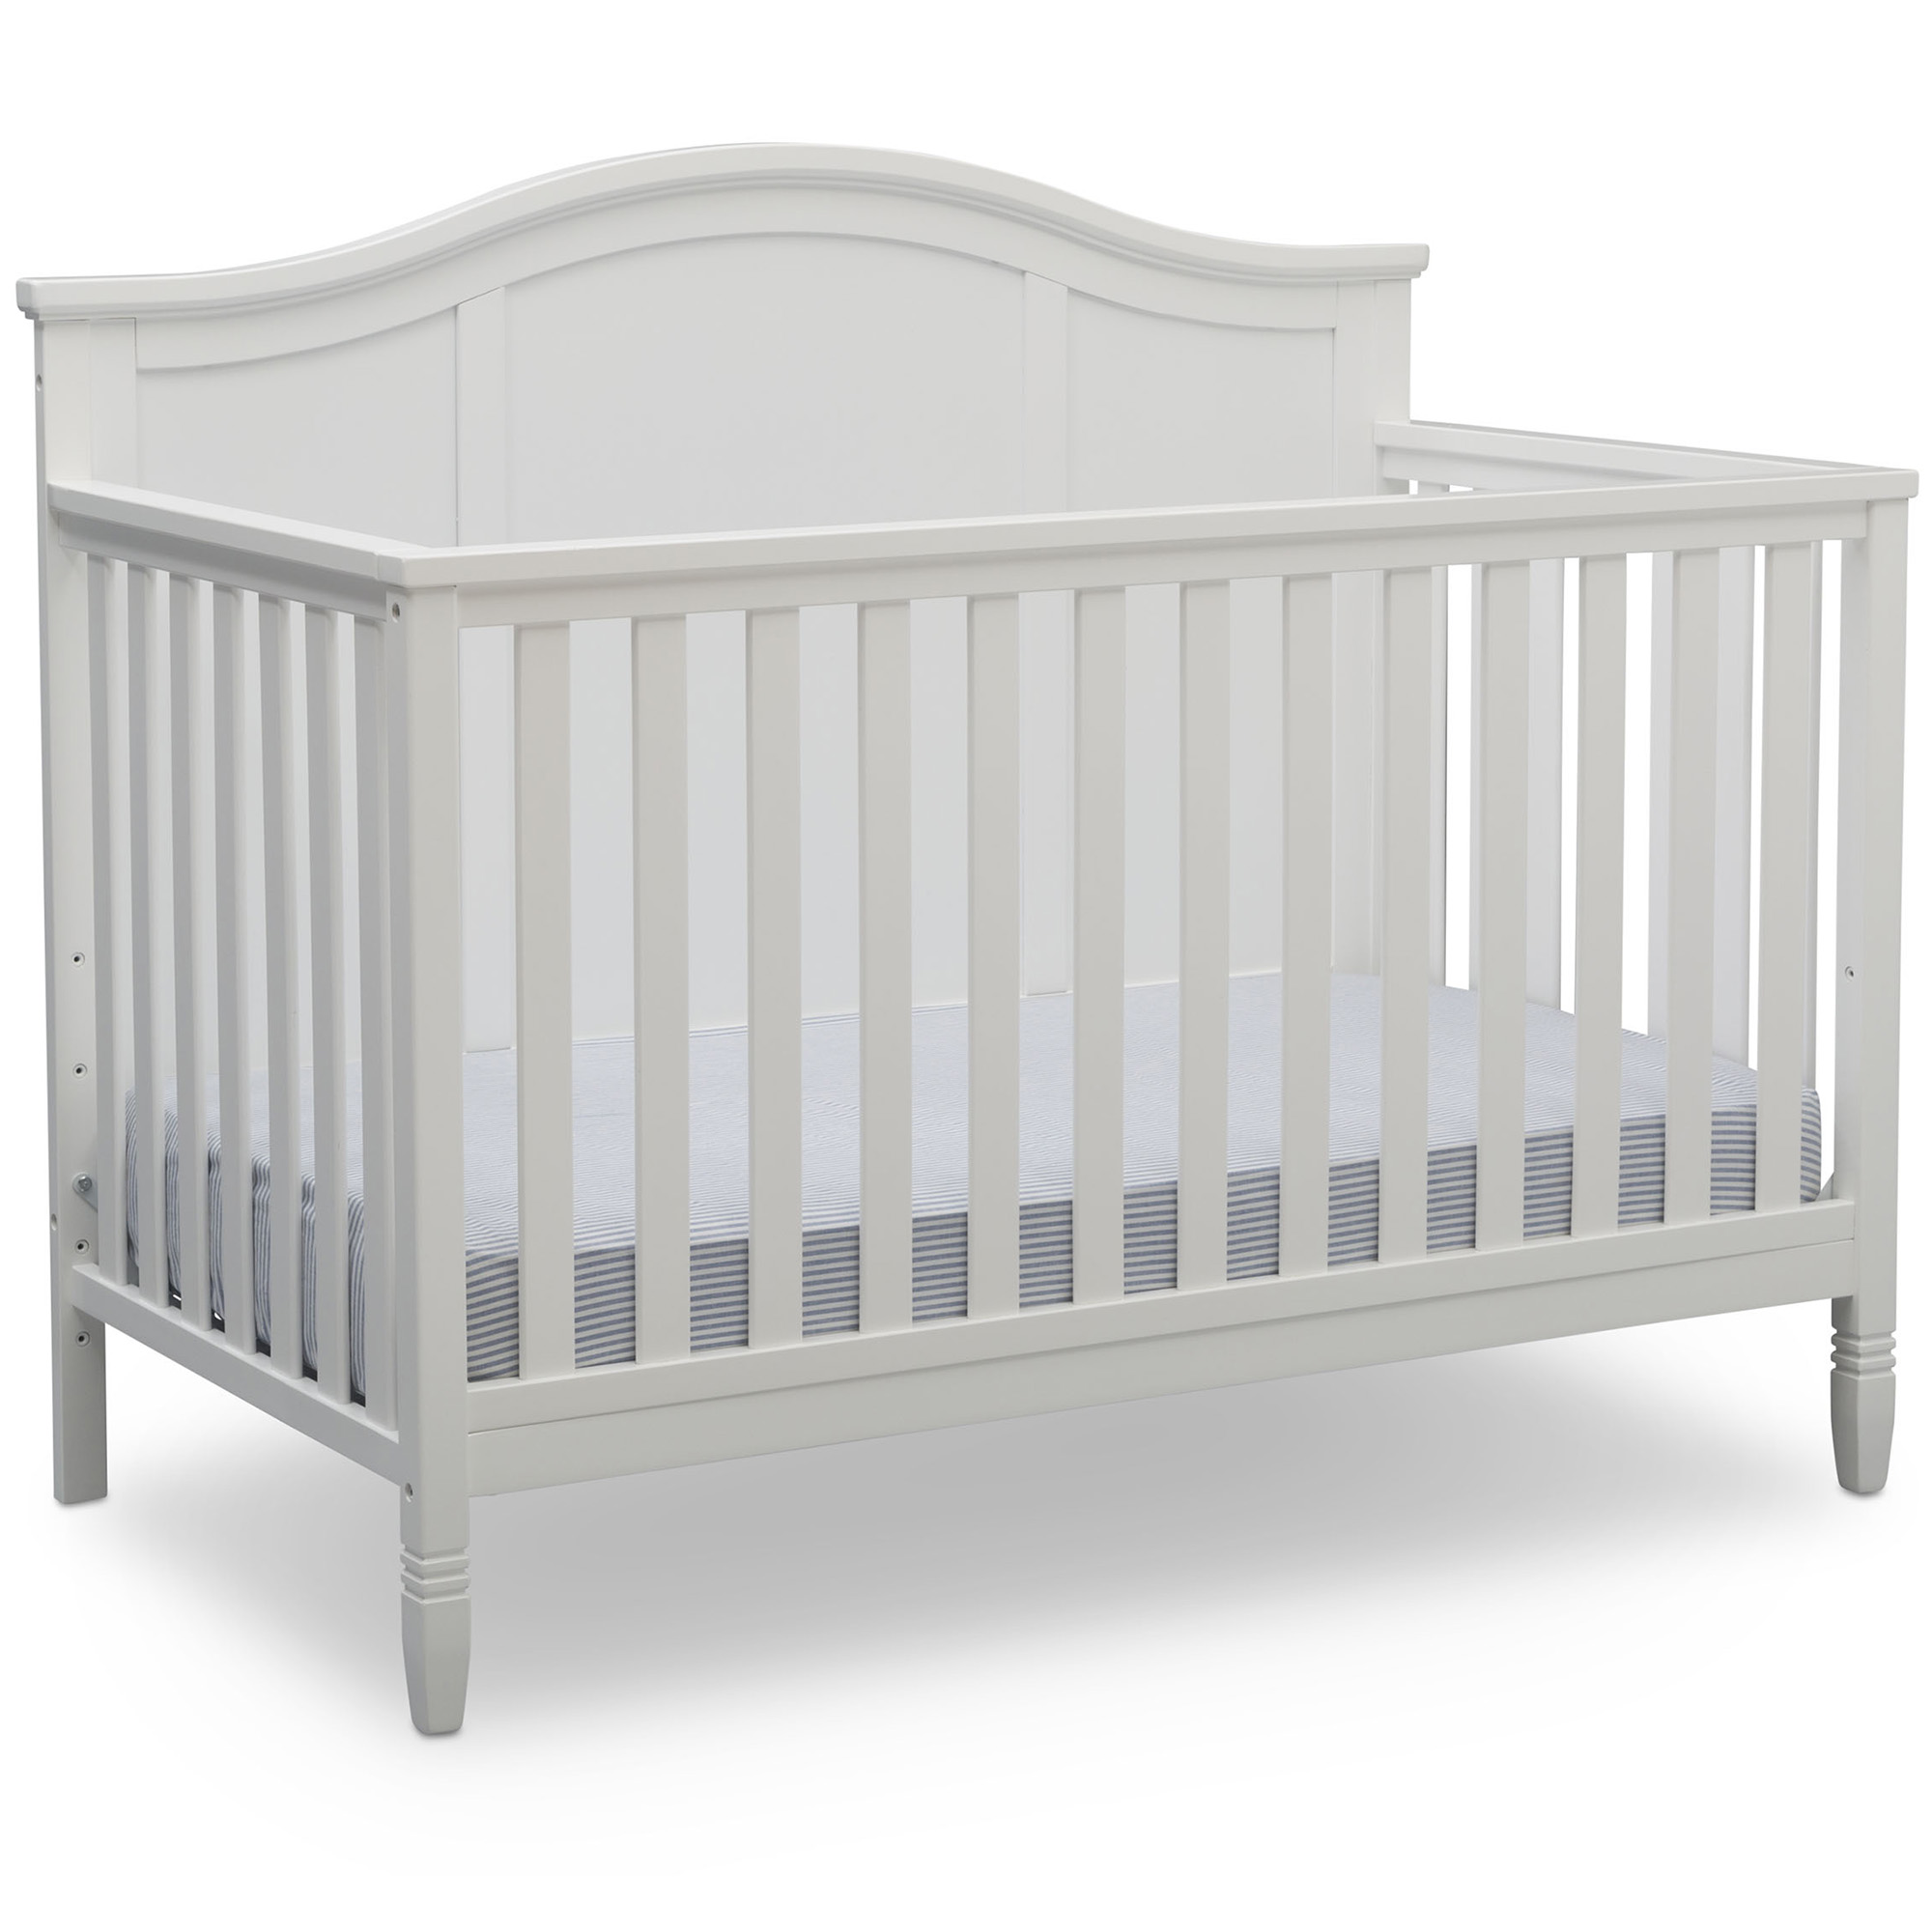 Delta Children Madrid 5-in-1 Convertible Baby Crib, Bianca White - image 1 of 12